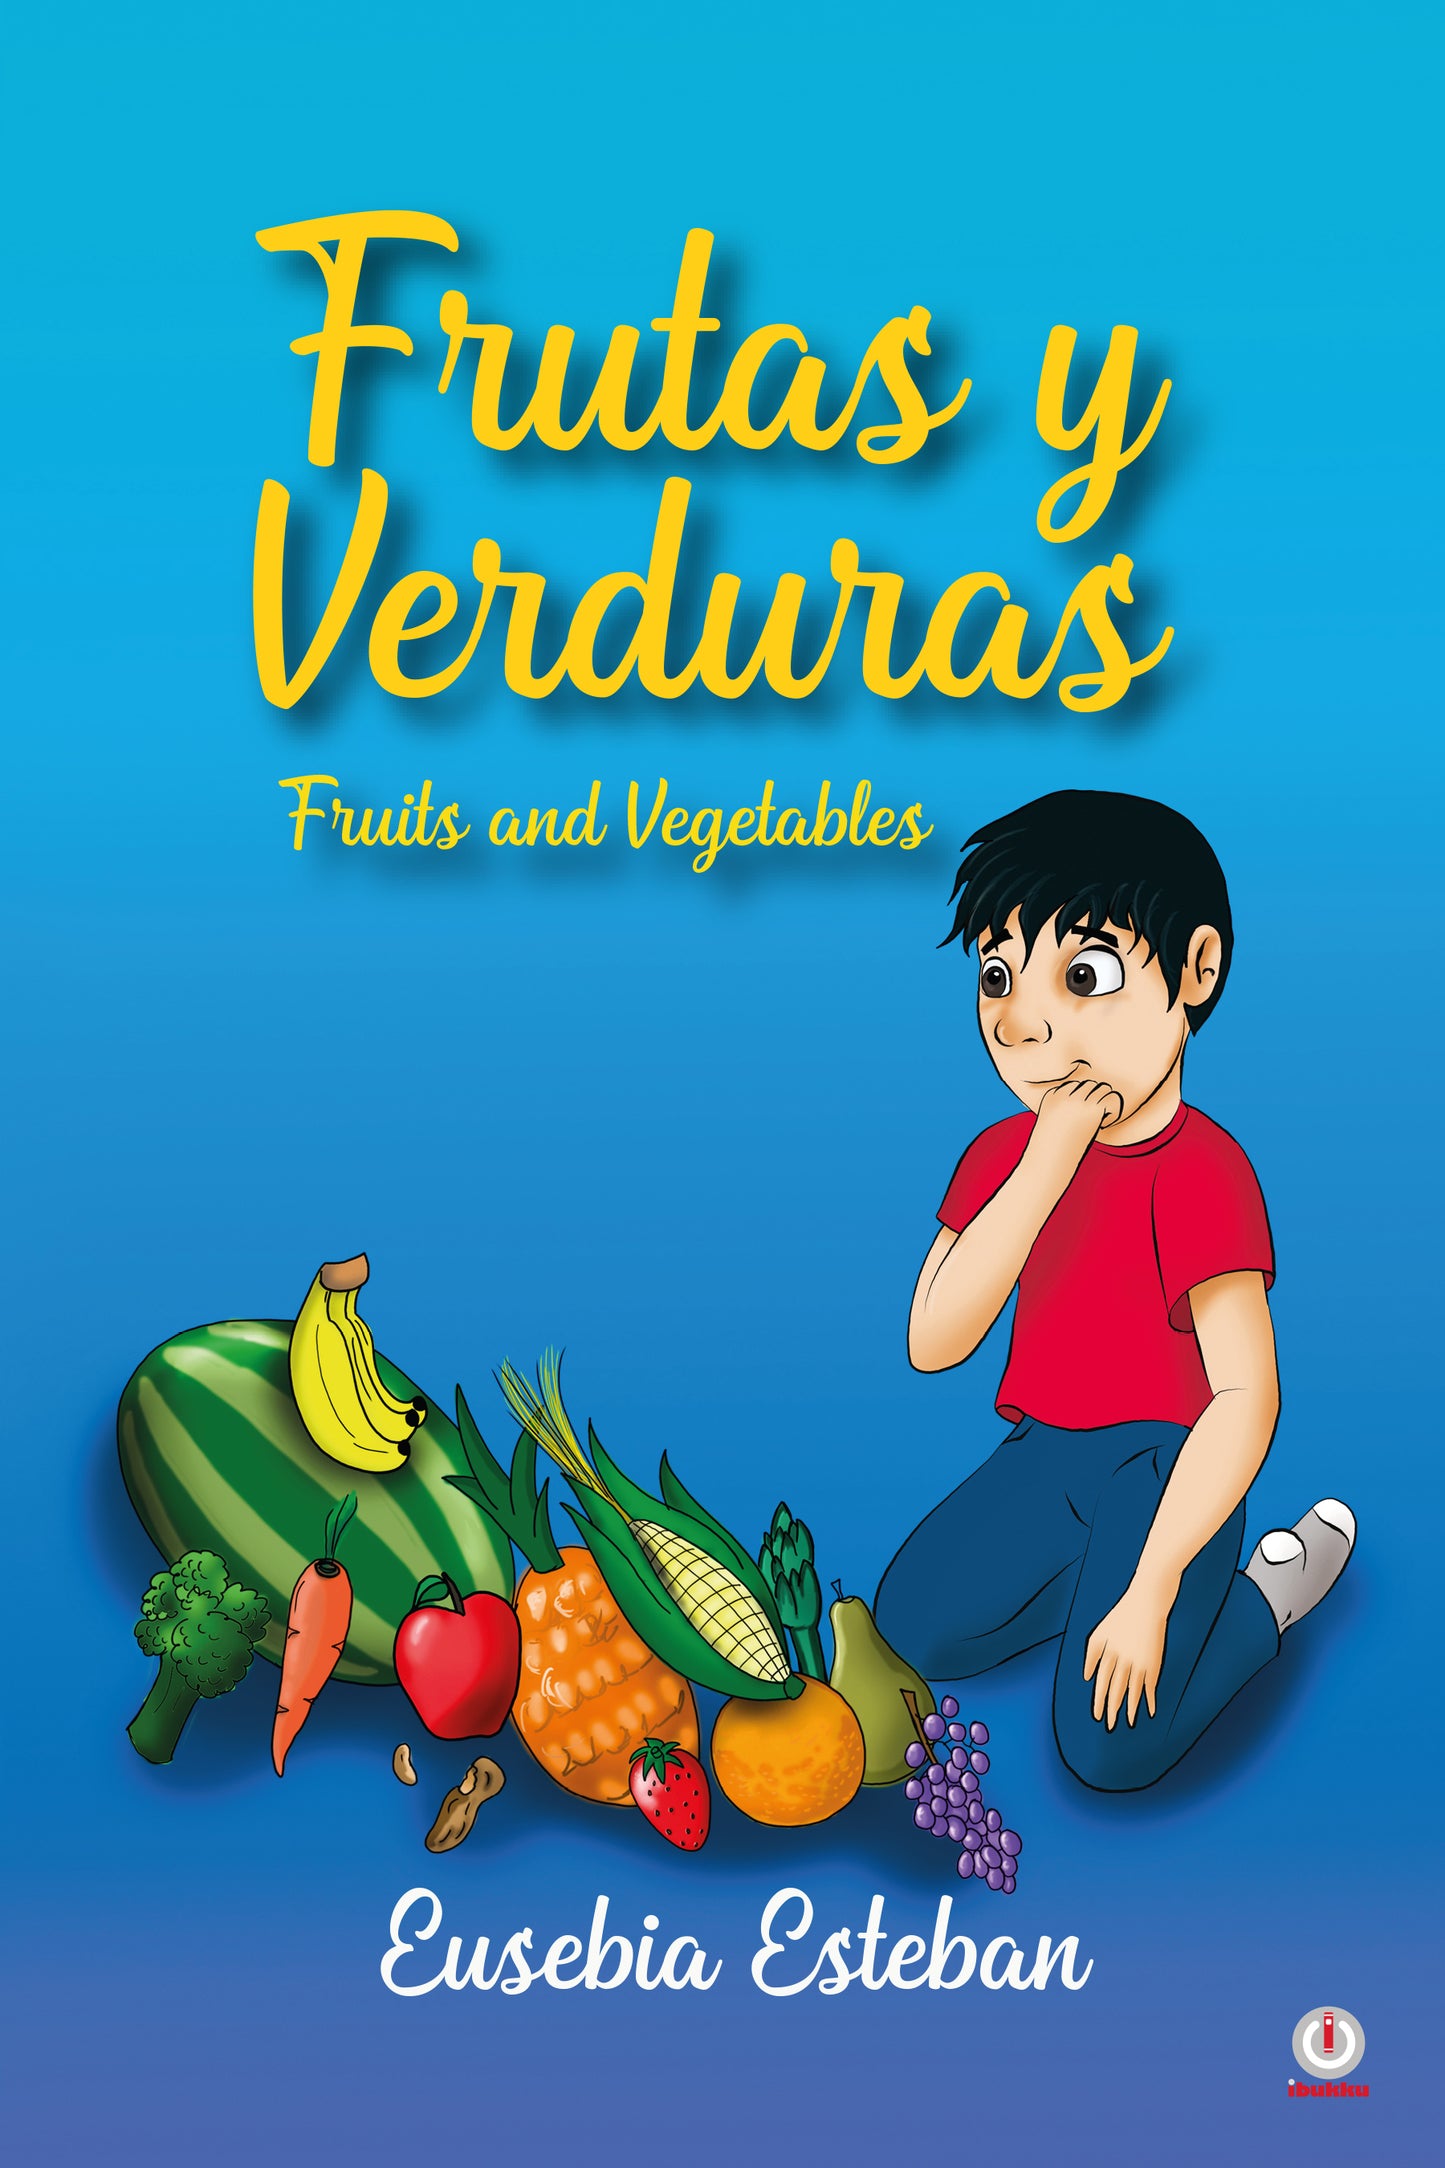 Frutas y verduras: Fruits and Vegetables